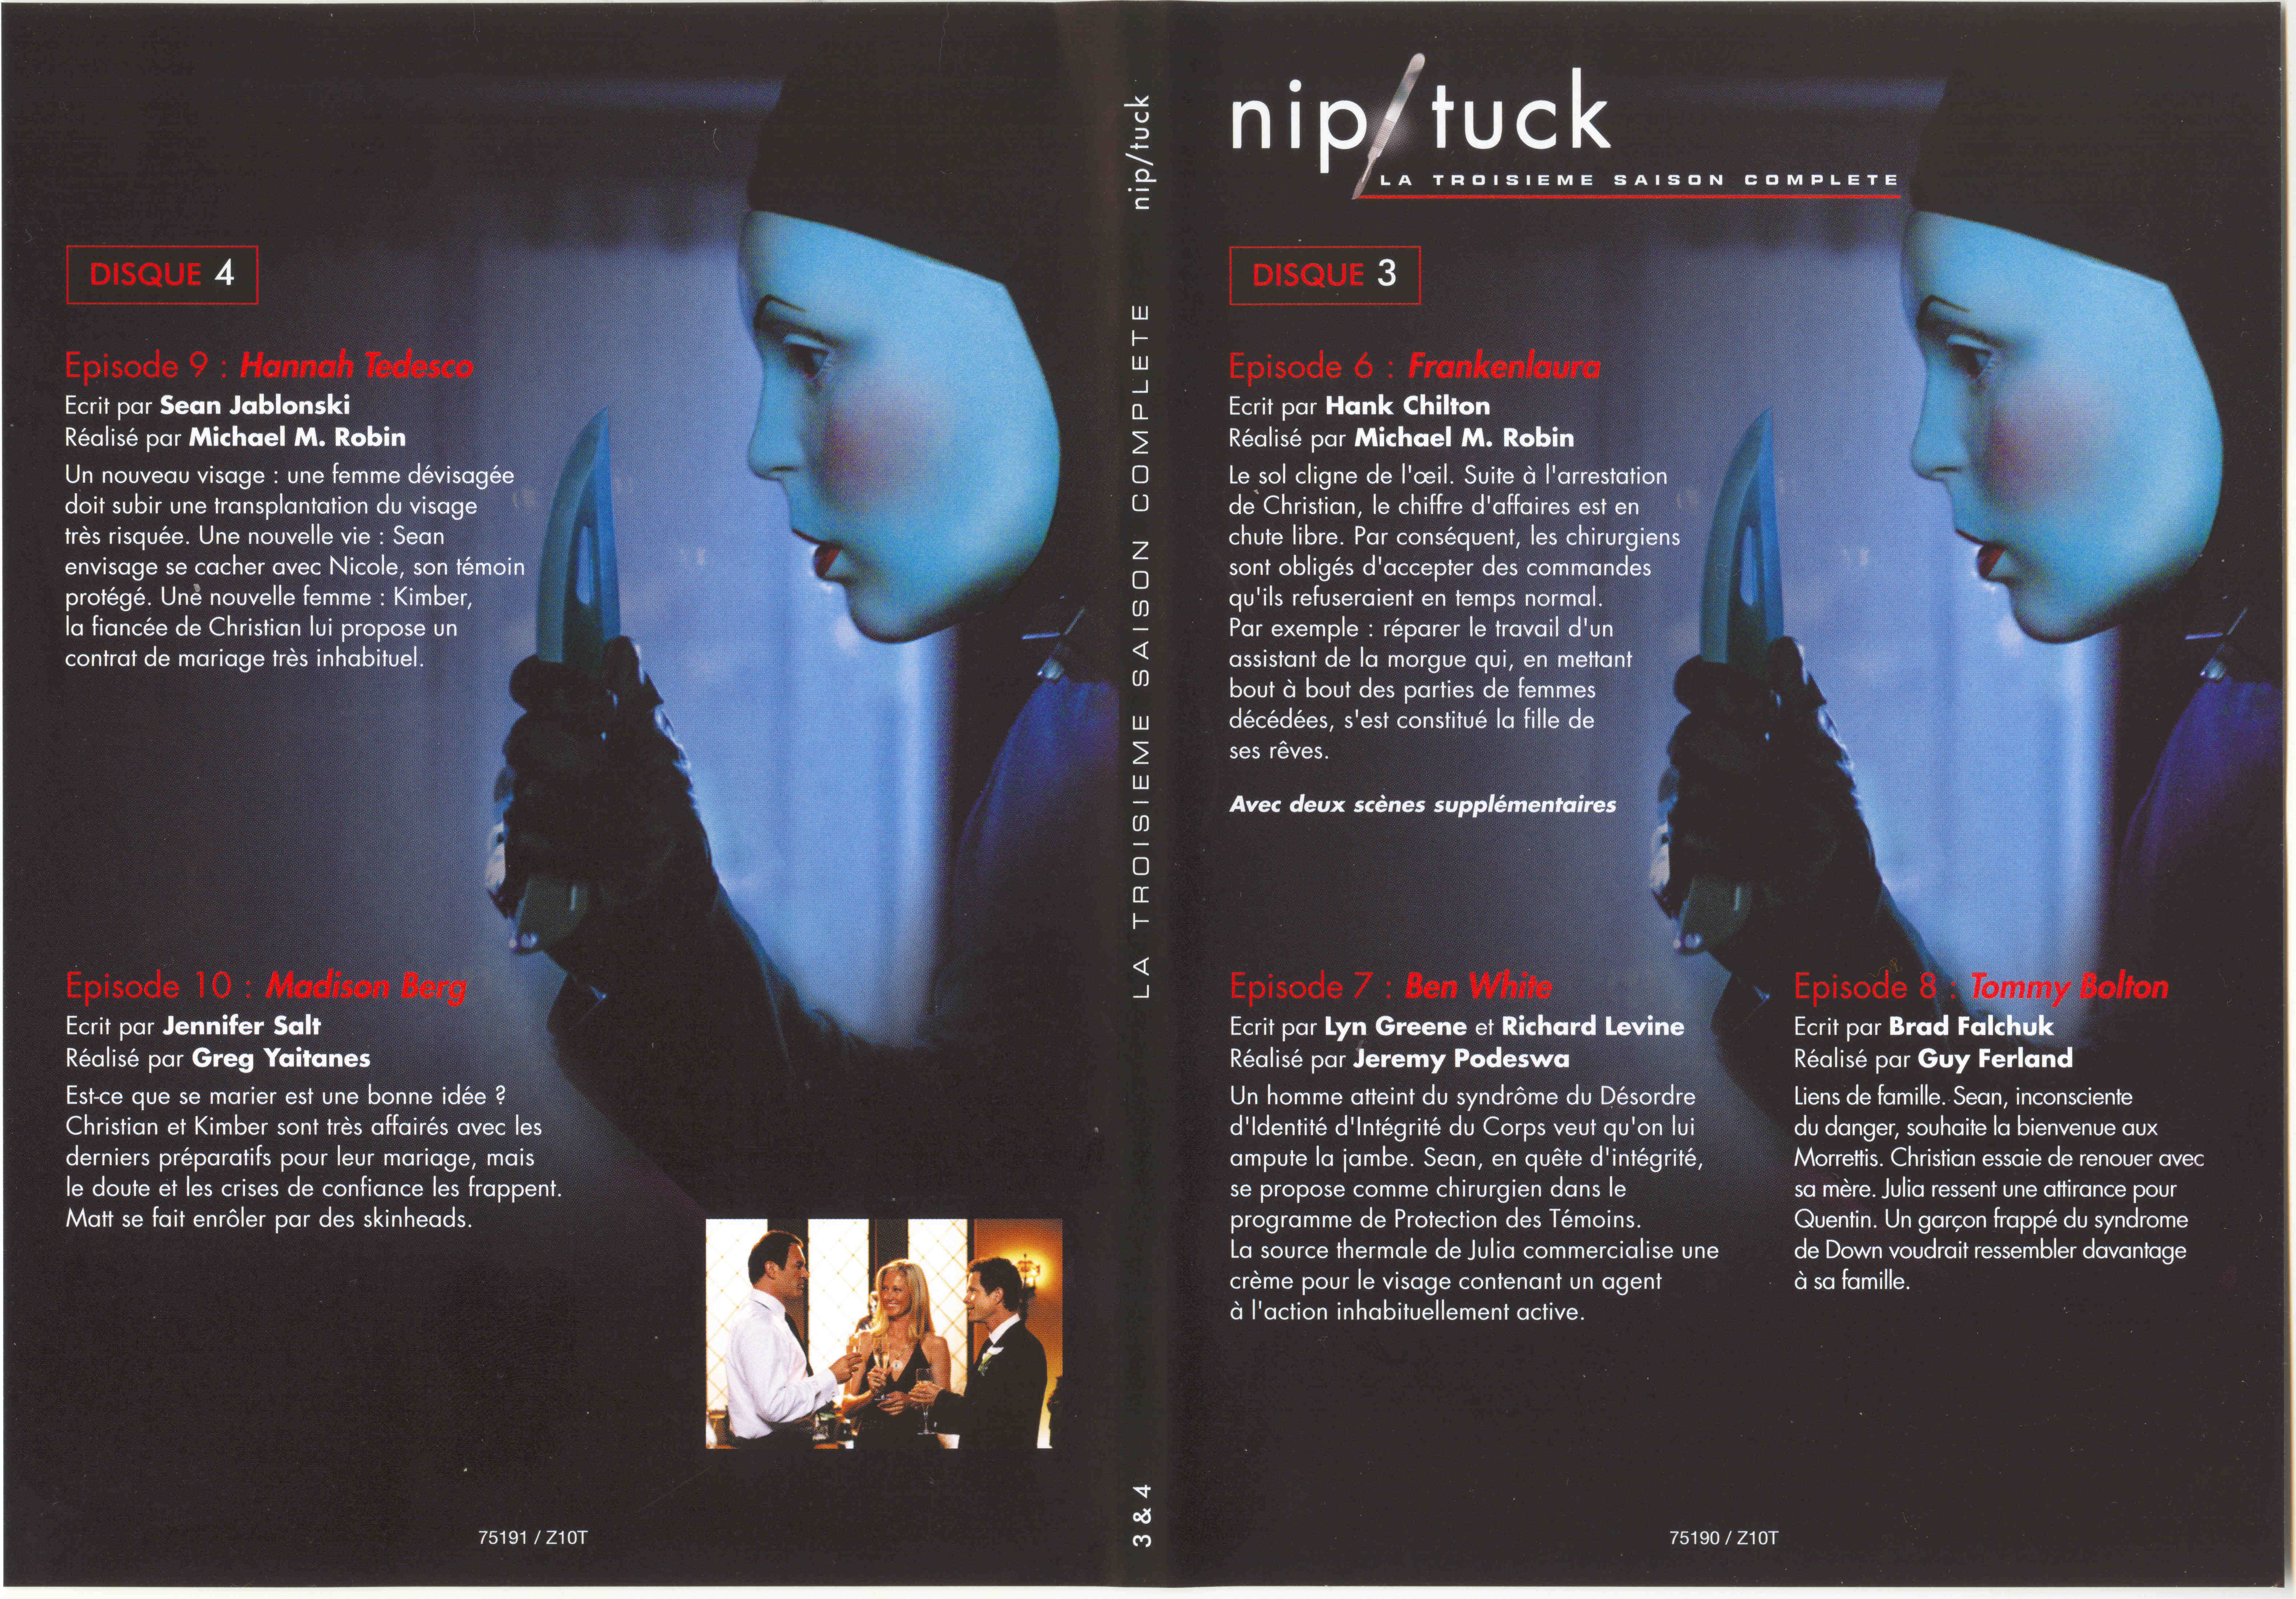 Jaquette DVD Nip-Tuck saison 3 DVD 2